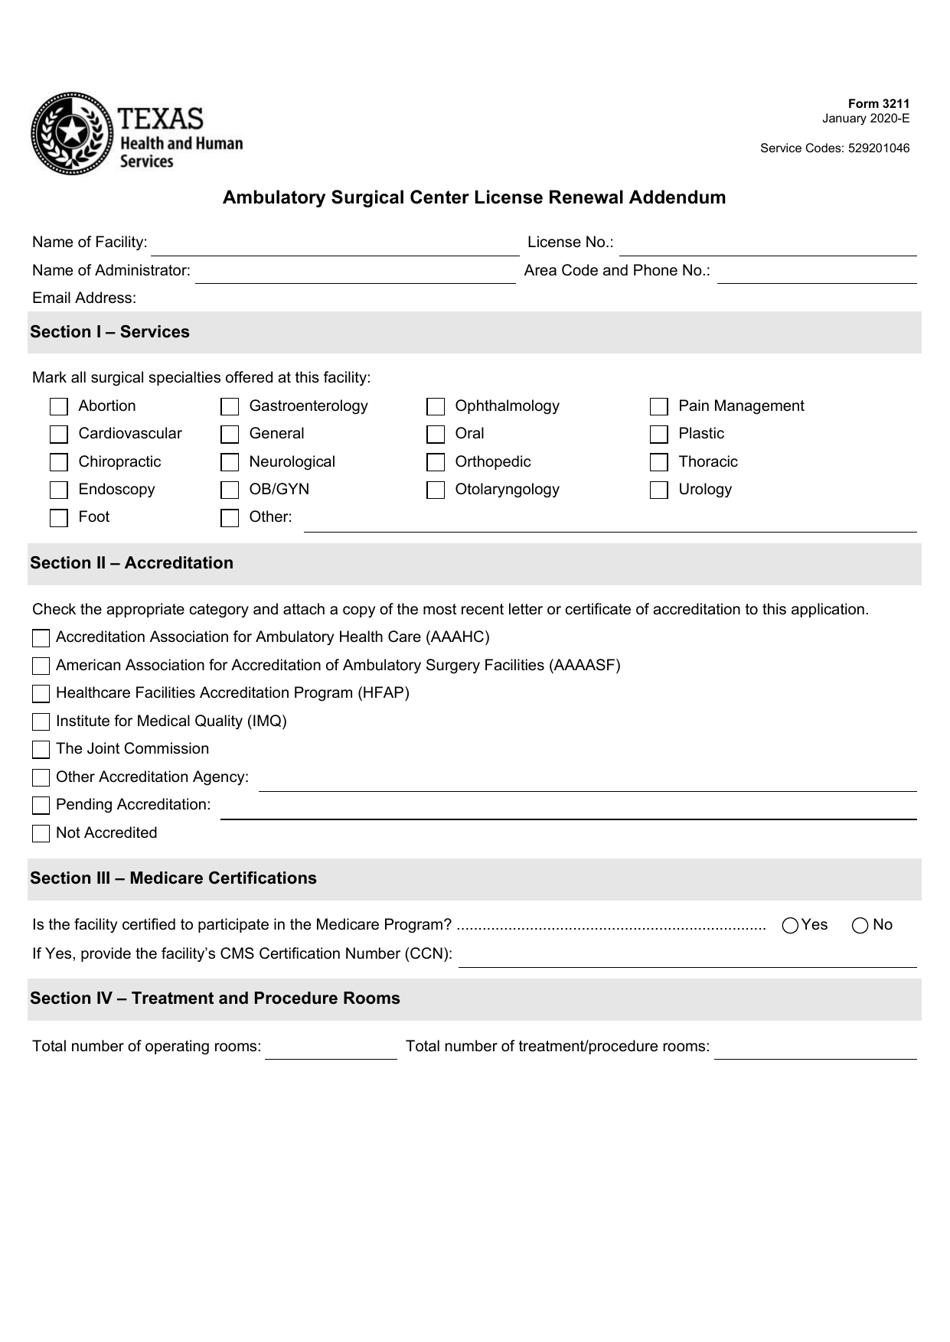 Form 3211 Ambulatory Surgical Center License Renewal Addendum - Texas, Page 1